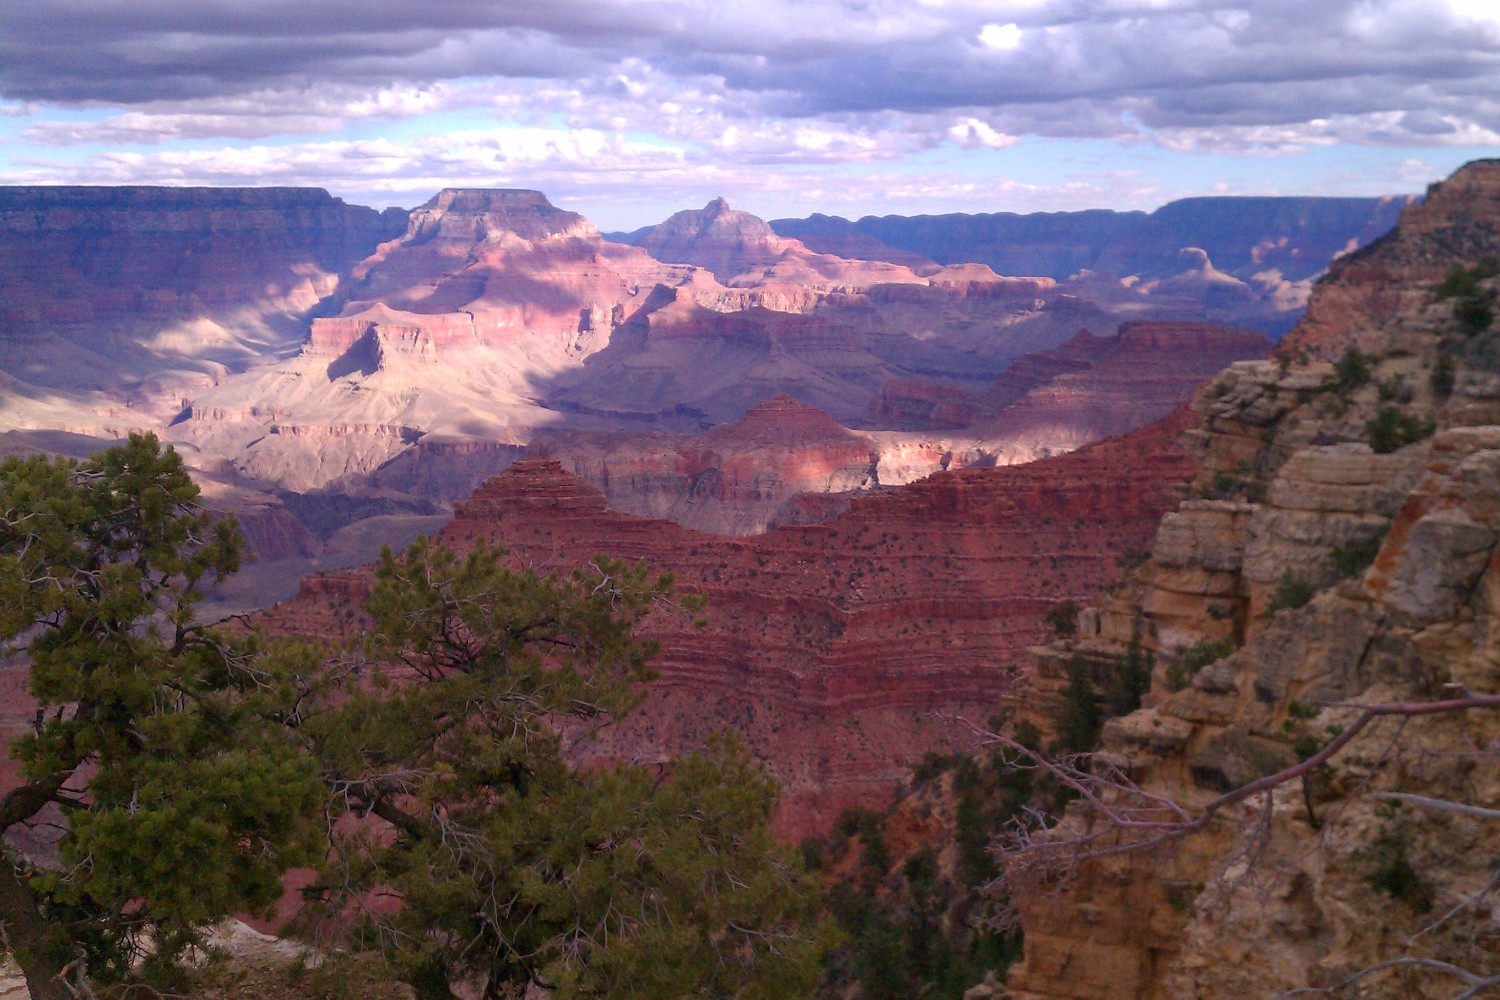 The South Rim of the Grand Canyon (Arizona).